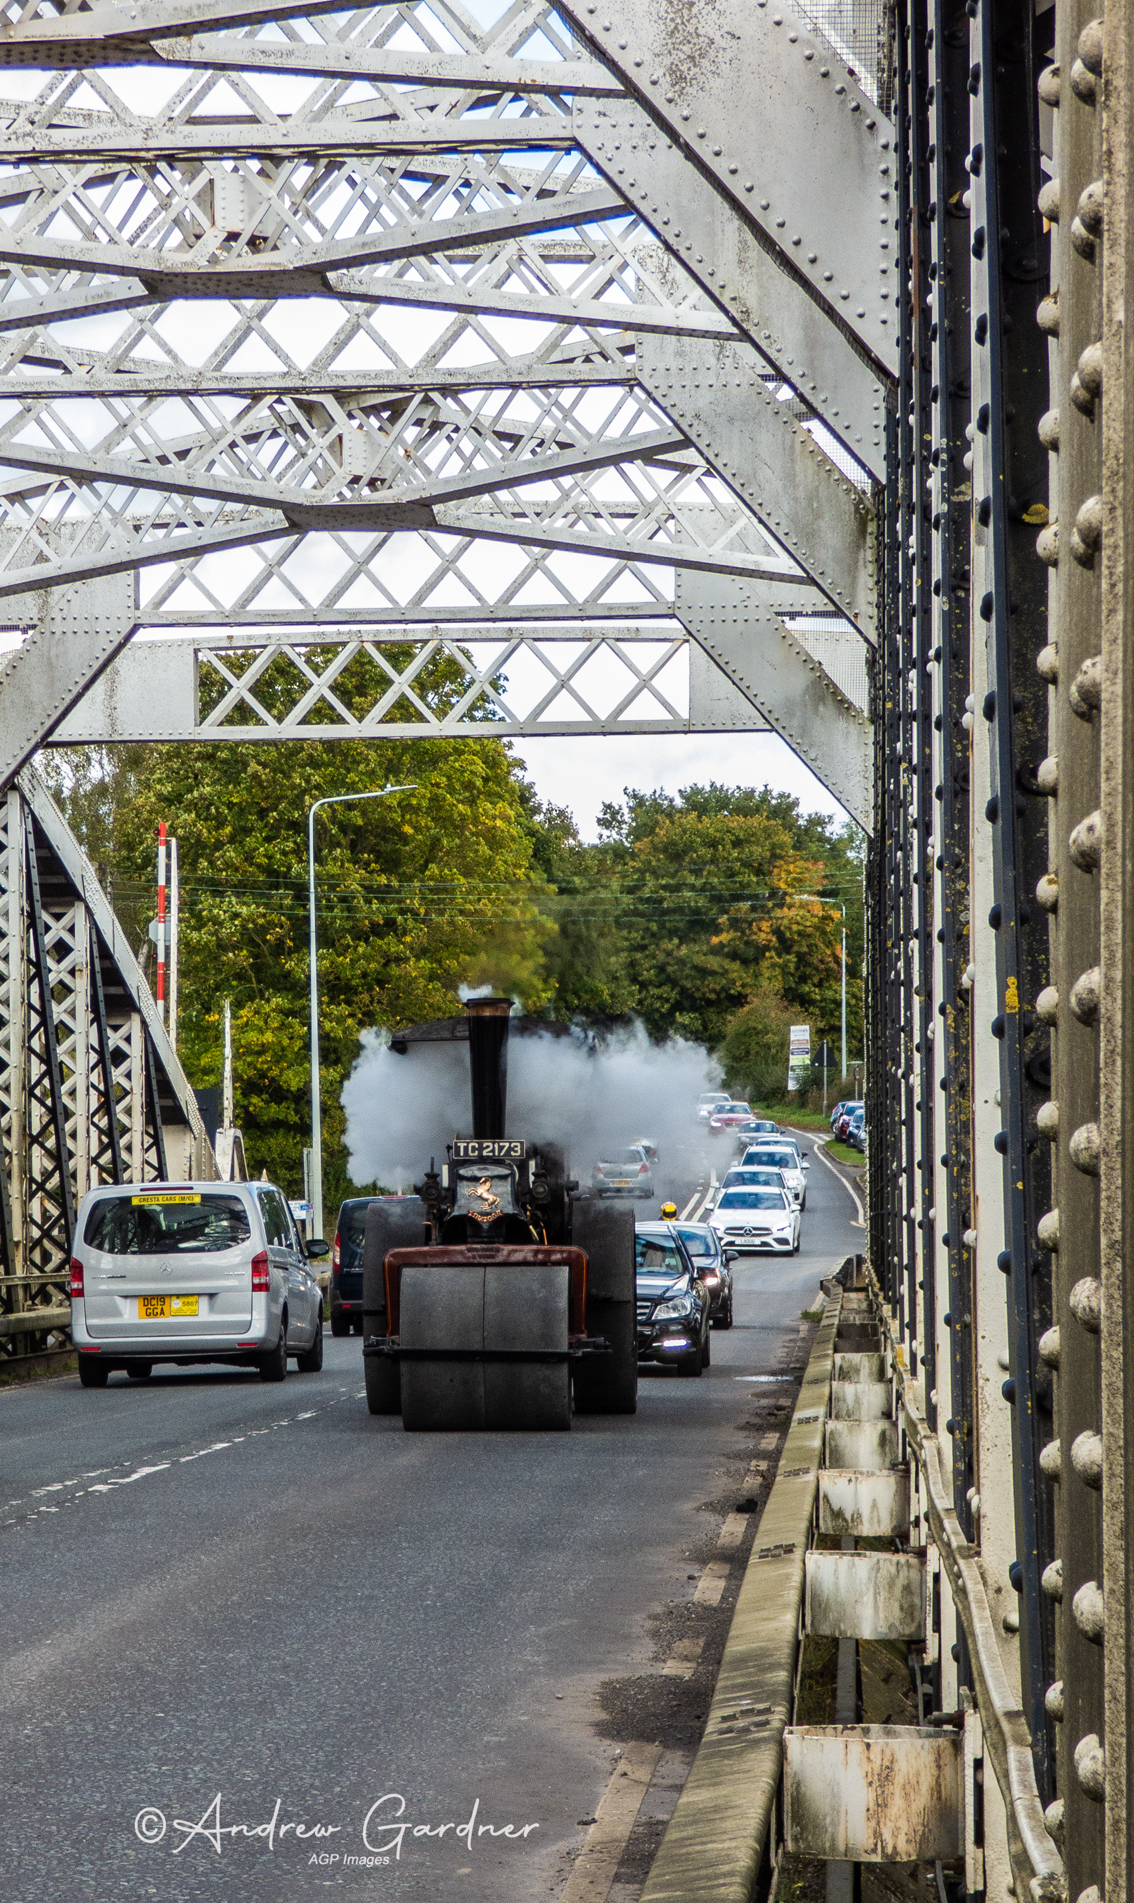 Full steam ahead on Acton Swing Bridge by Andrew Gardner